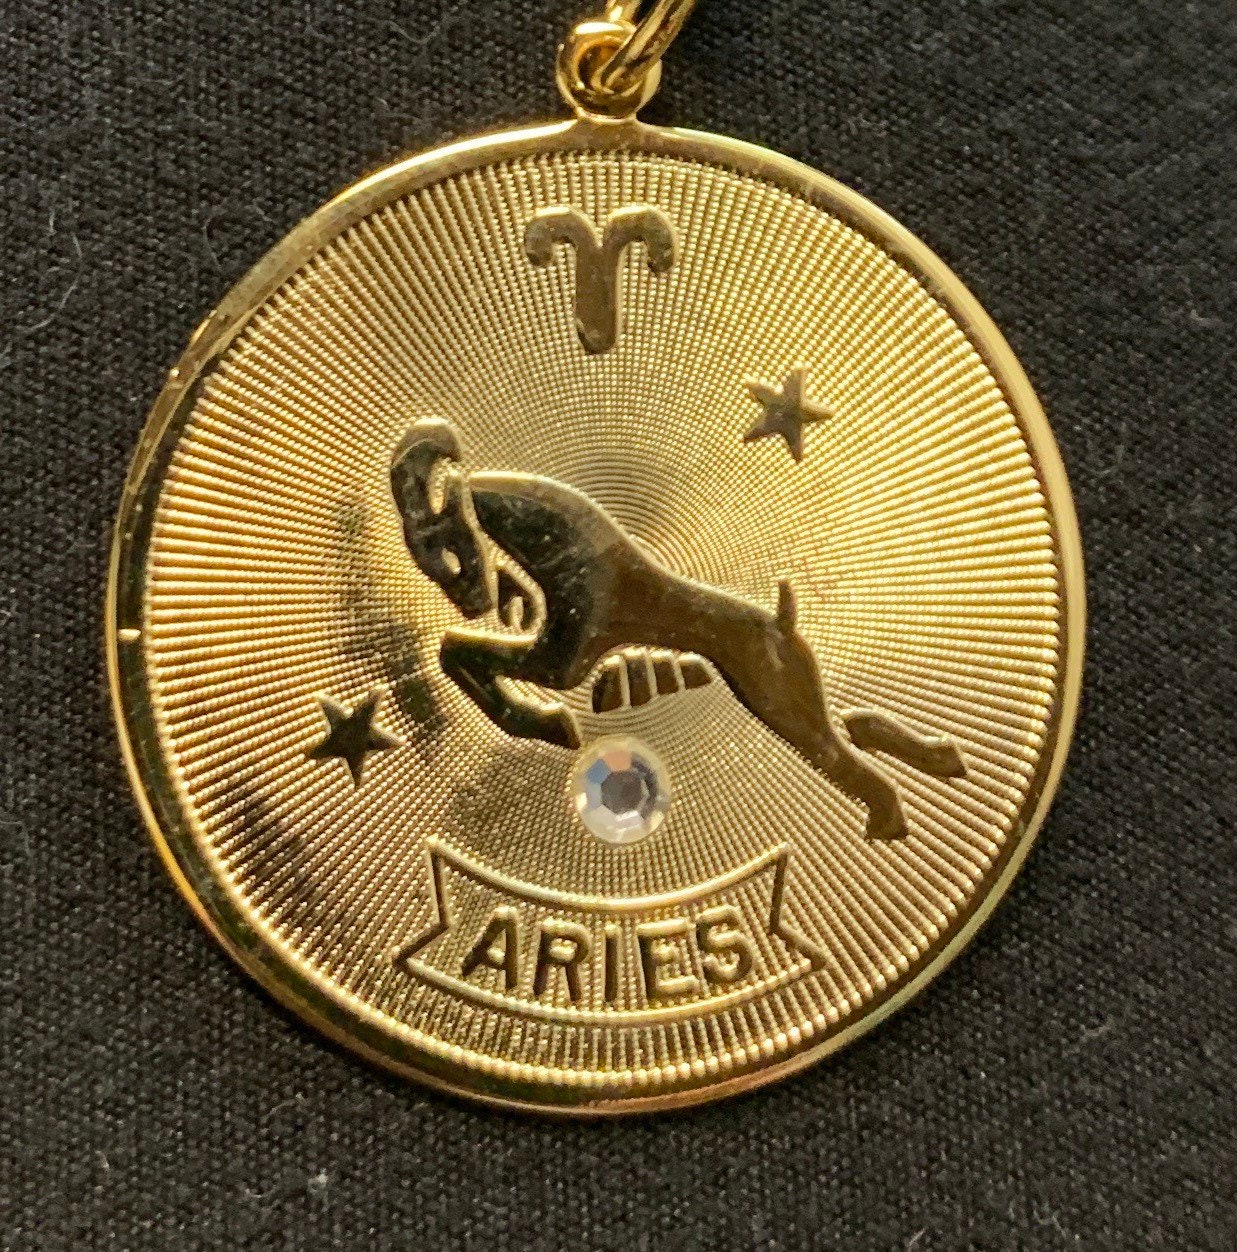 Vintage Zodiac Sign Key Ring Original 1970's Aries Ram Medallion Keychain With Glass Diamond Birthstone March April Birthday New Age Gift